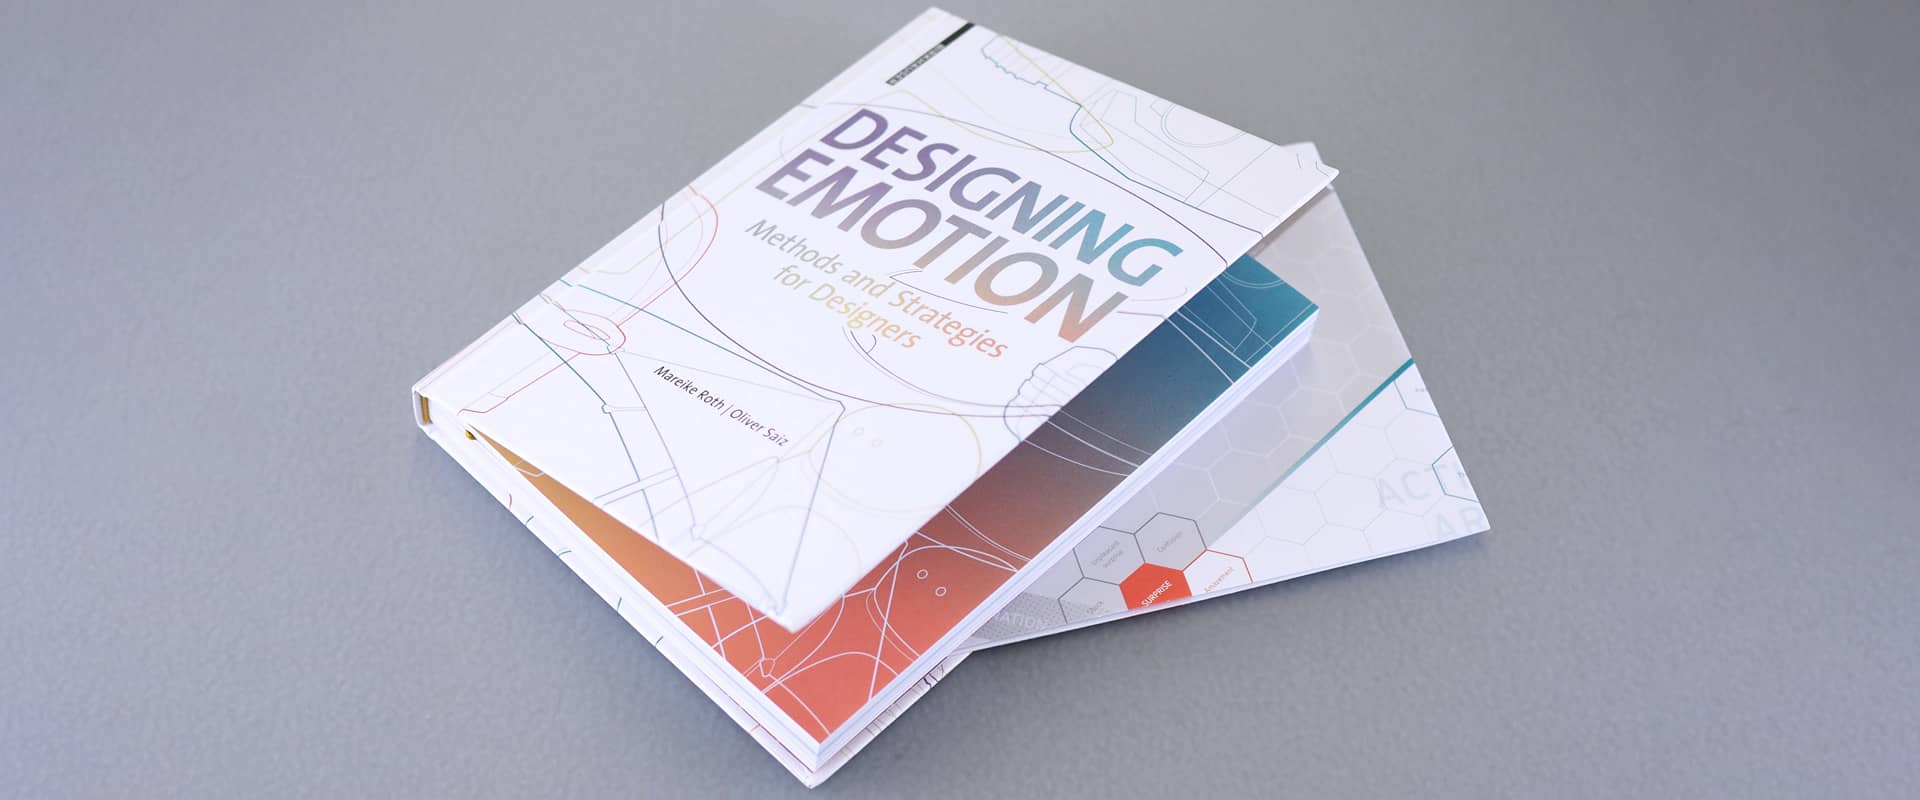 13 internationales Fachbuch Designing Emotion